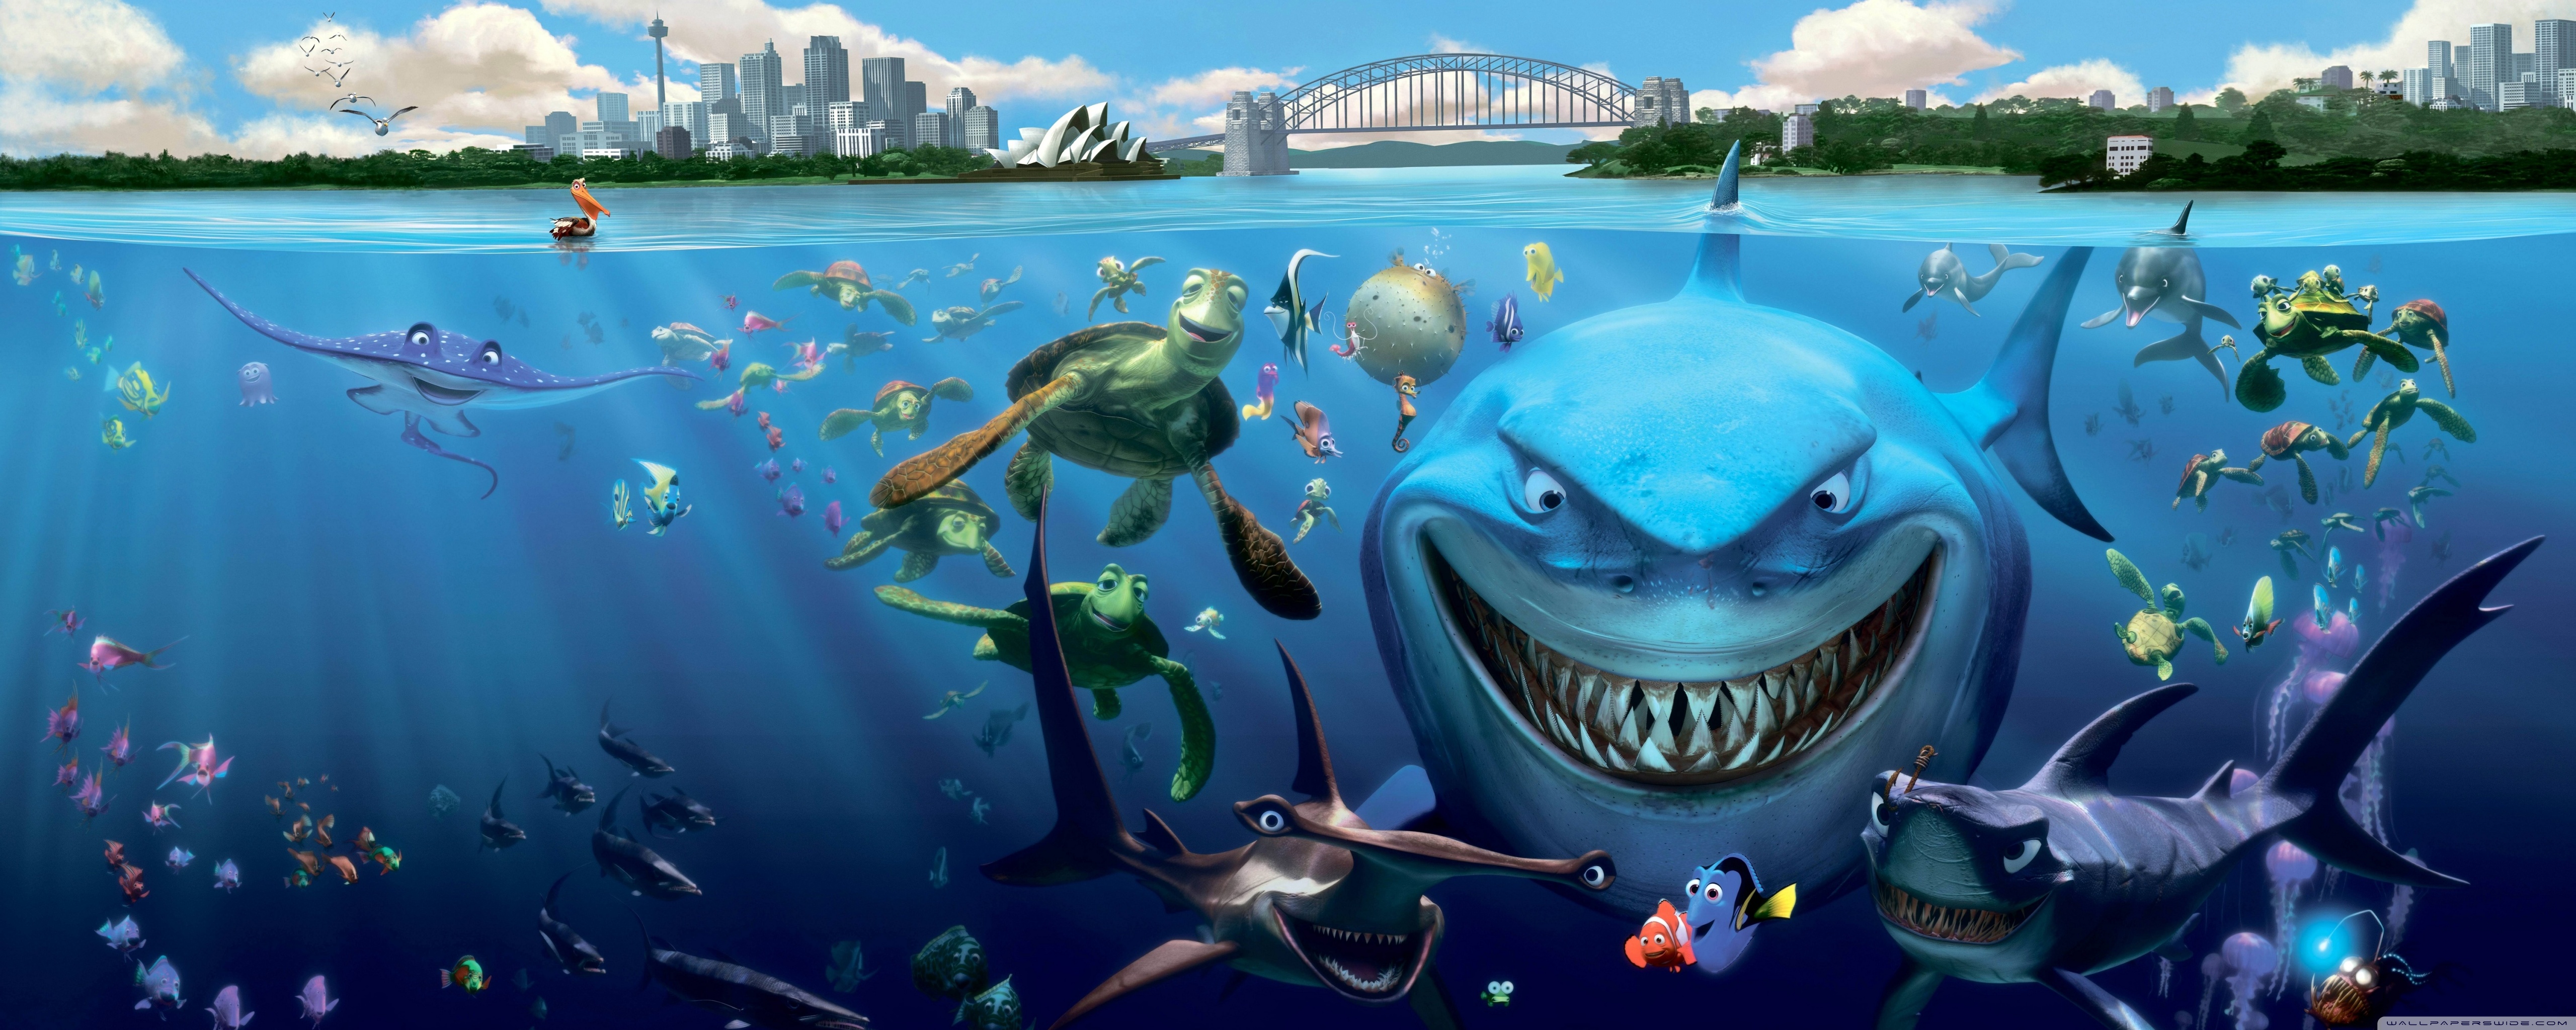 Finding Nemo Cast Ultra HD Desktop Background Wallpaper For 4k UHD